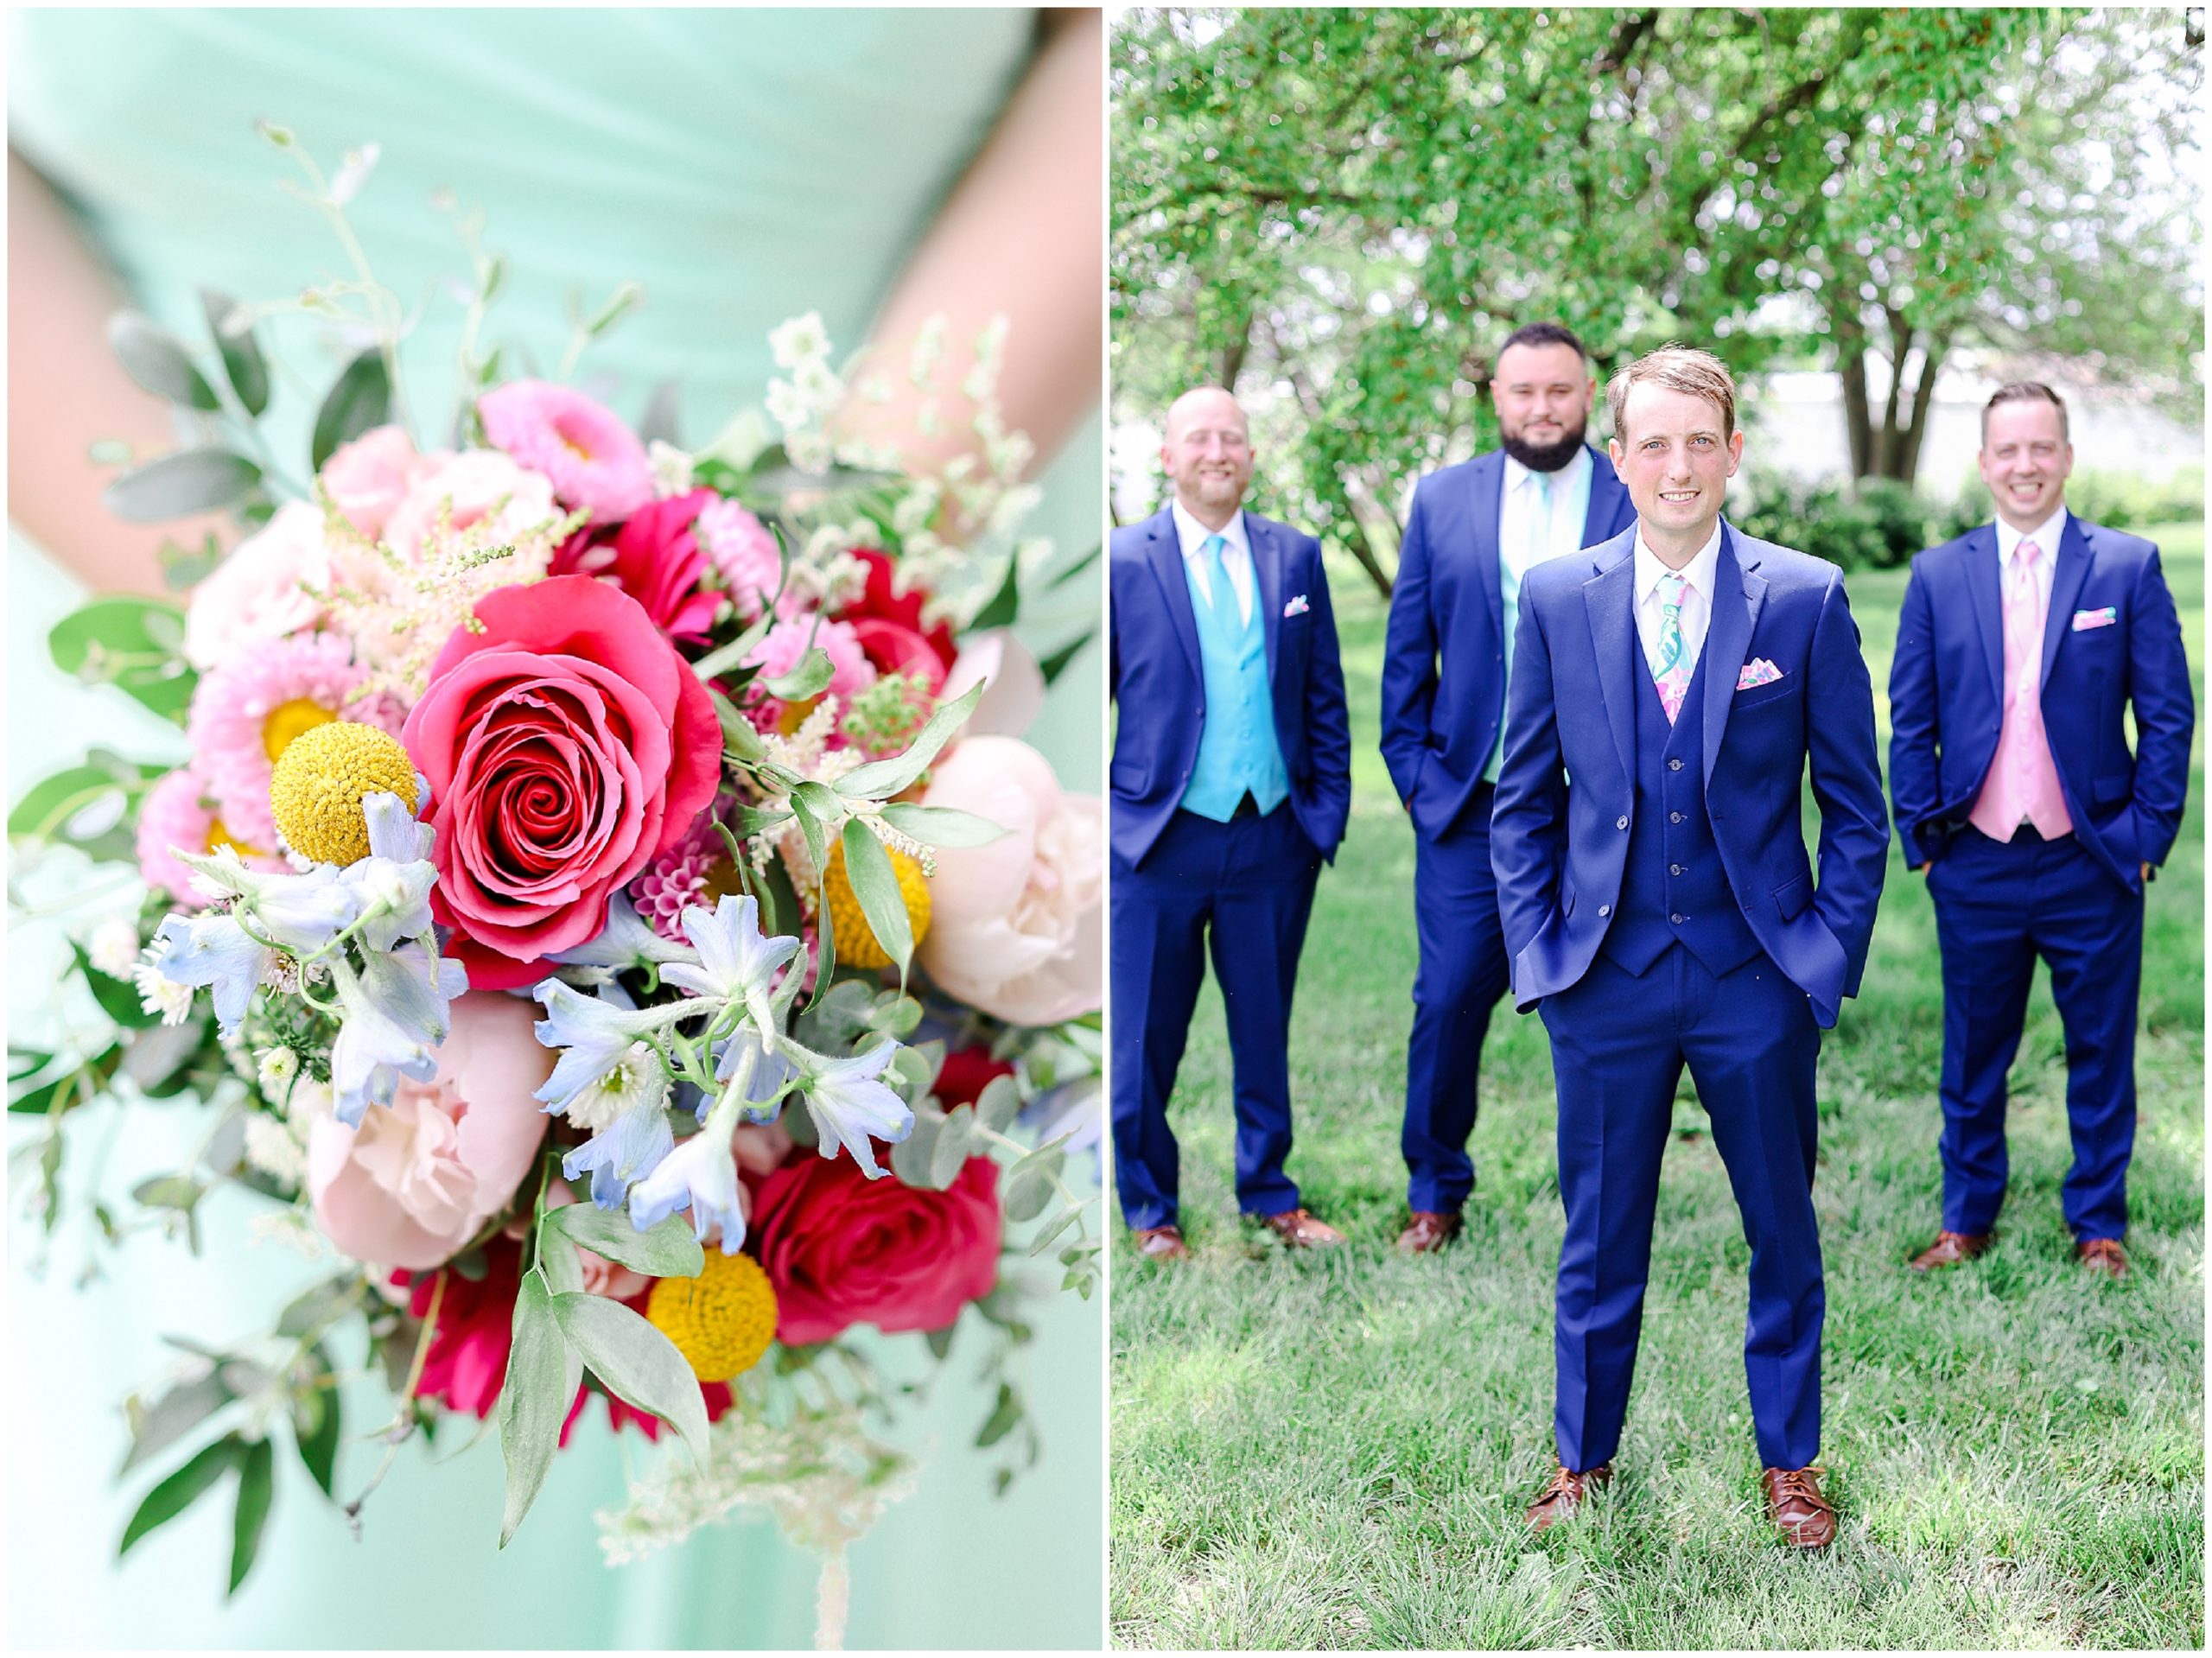 Colorful and Joyful Wedding Photography - Kansas City Wedding Photographer - The Rhapsody - bride and groom wedding portraits 